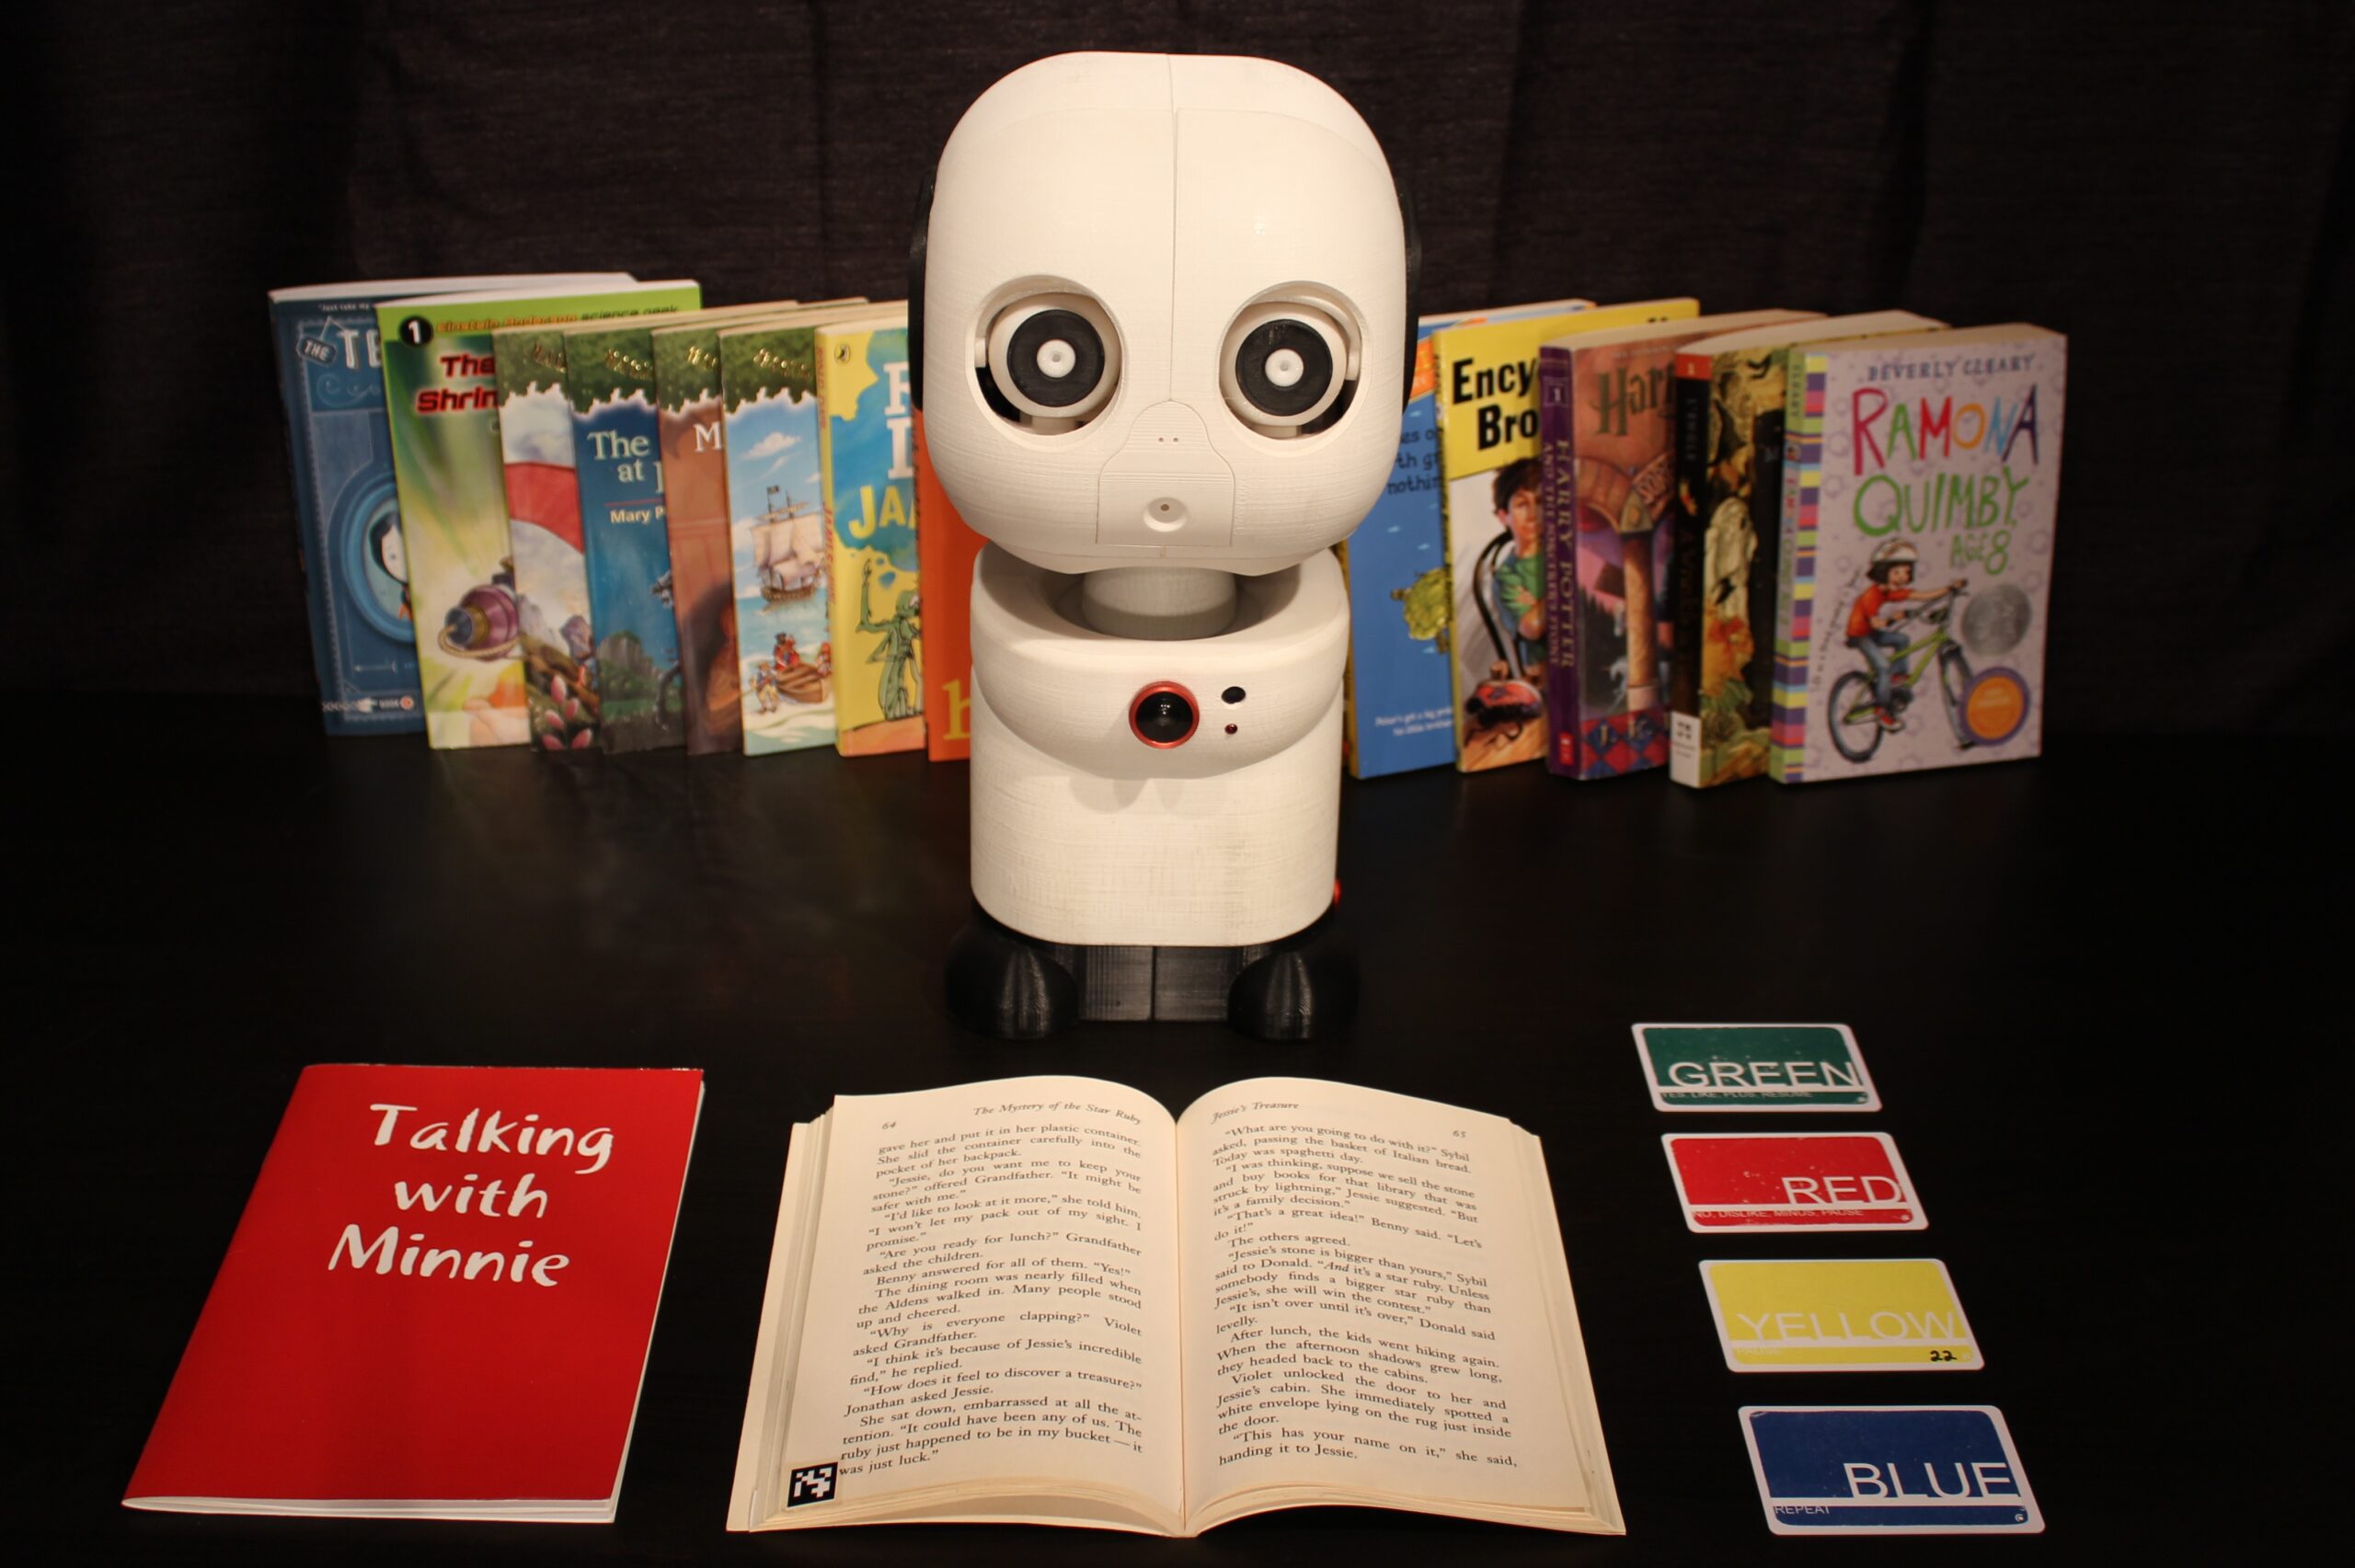 Kids aren’t reading enough. One solution? Robots.